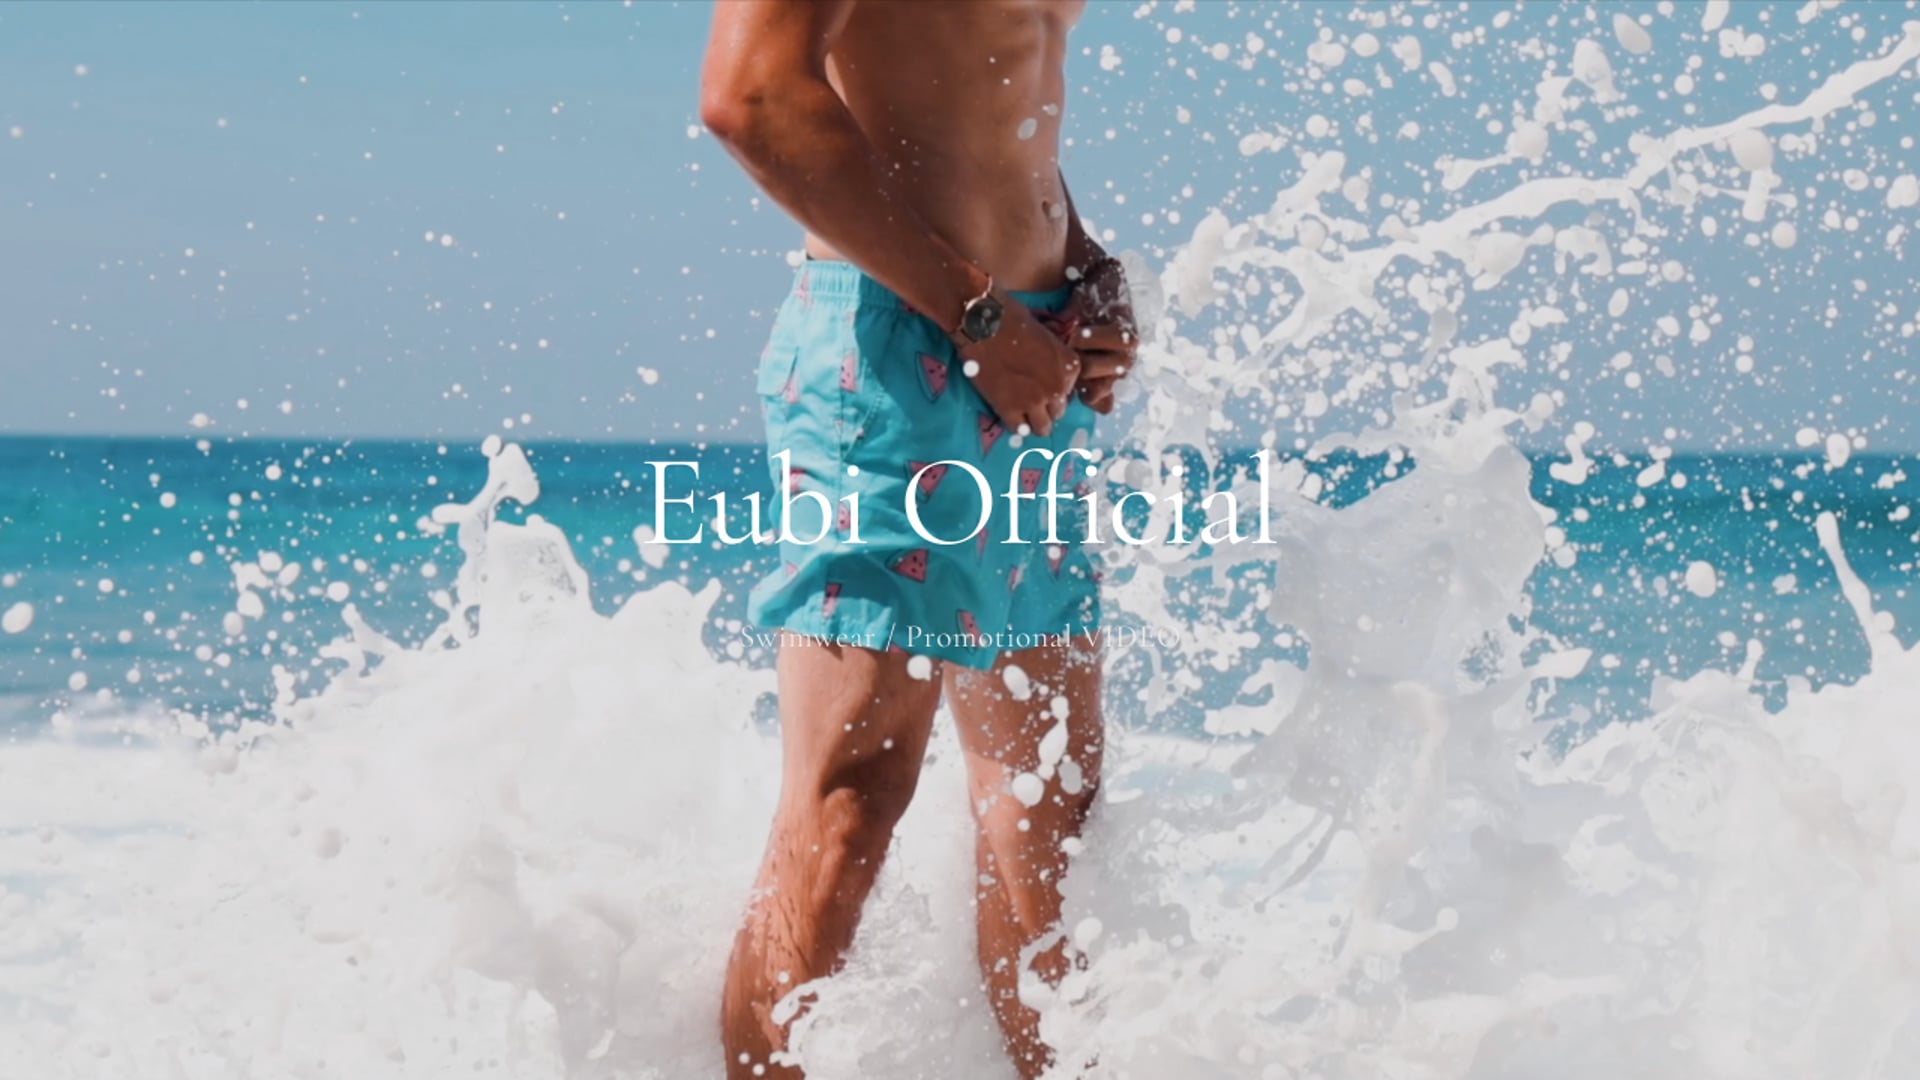 EUBI Official / Swimwear / Promotional Video